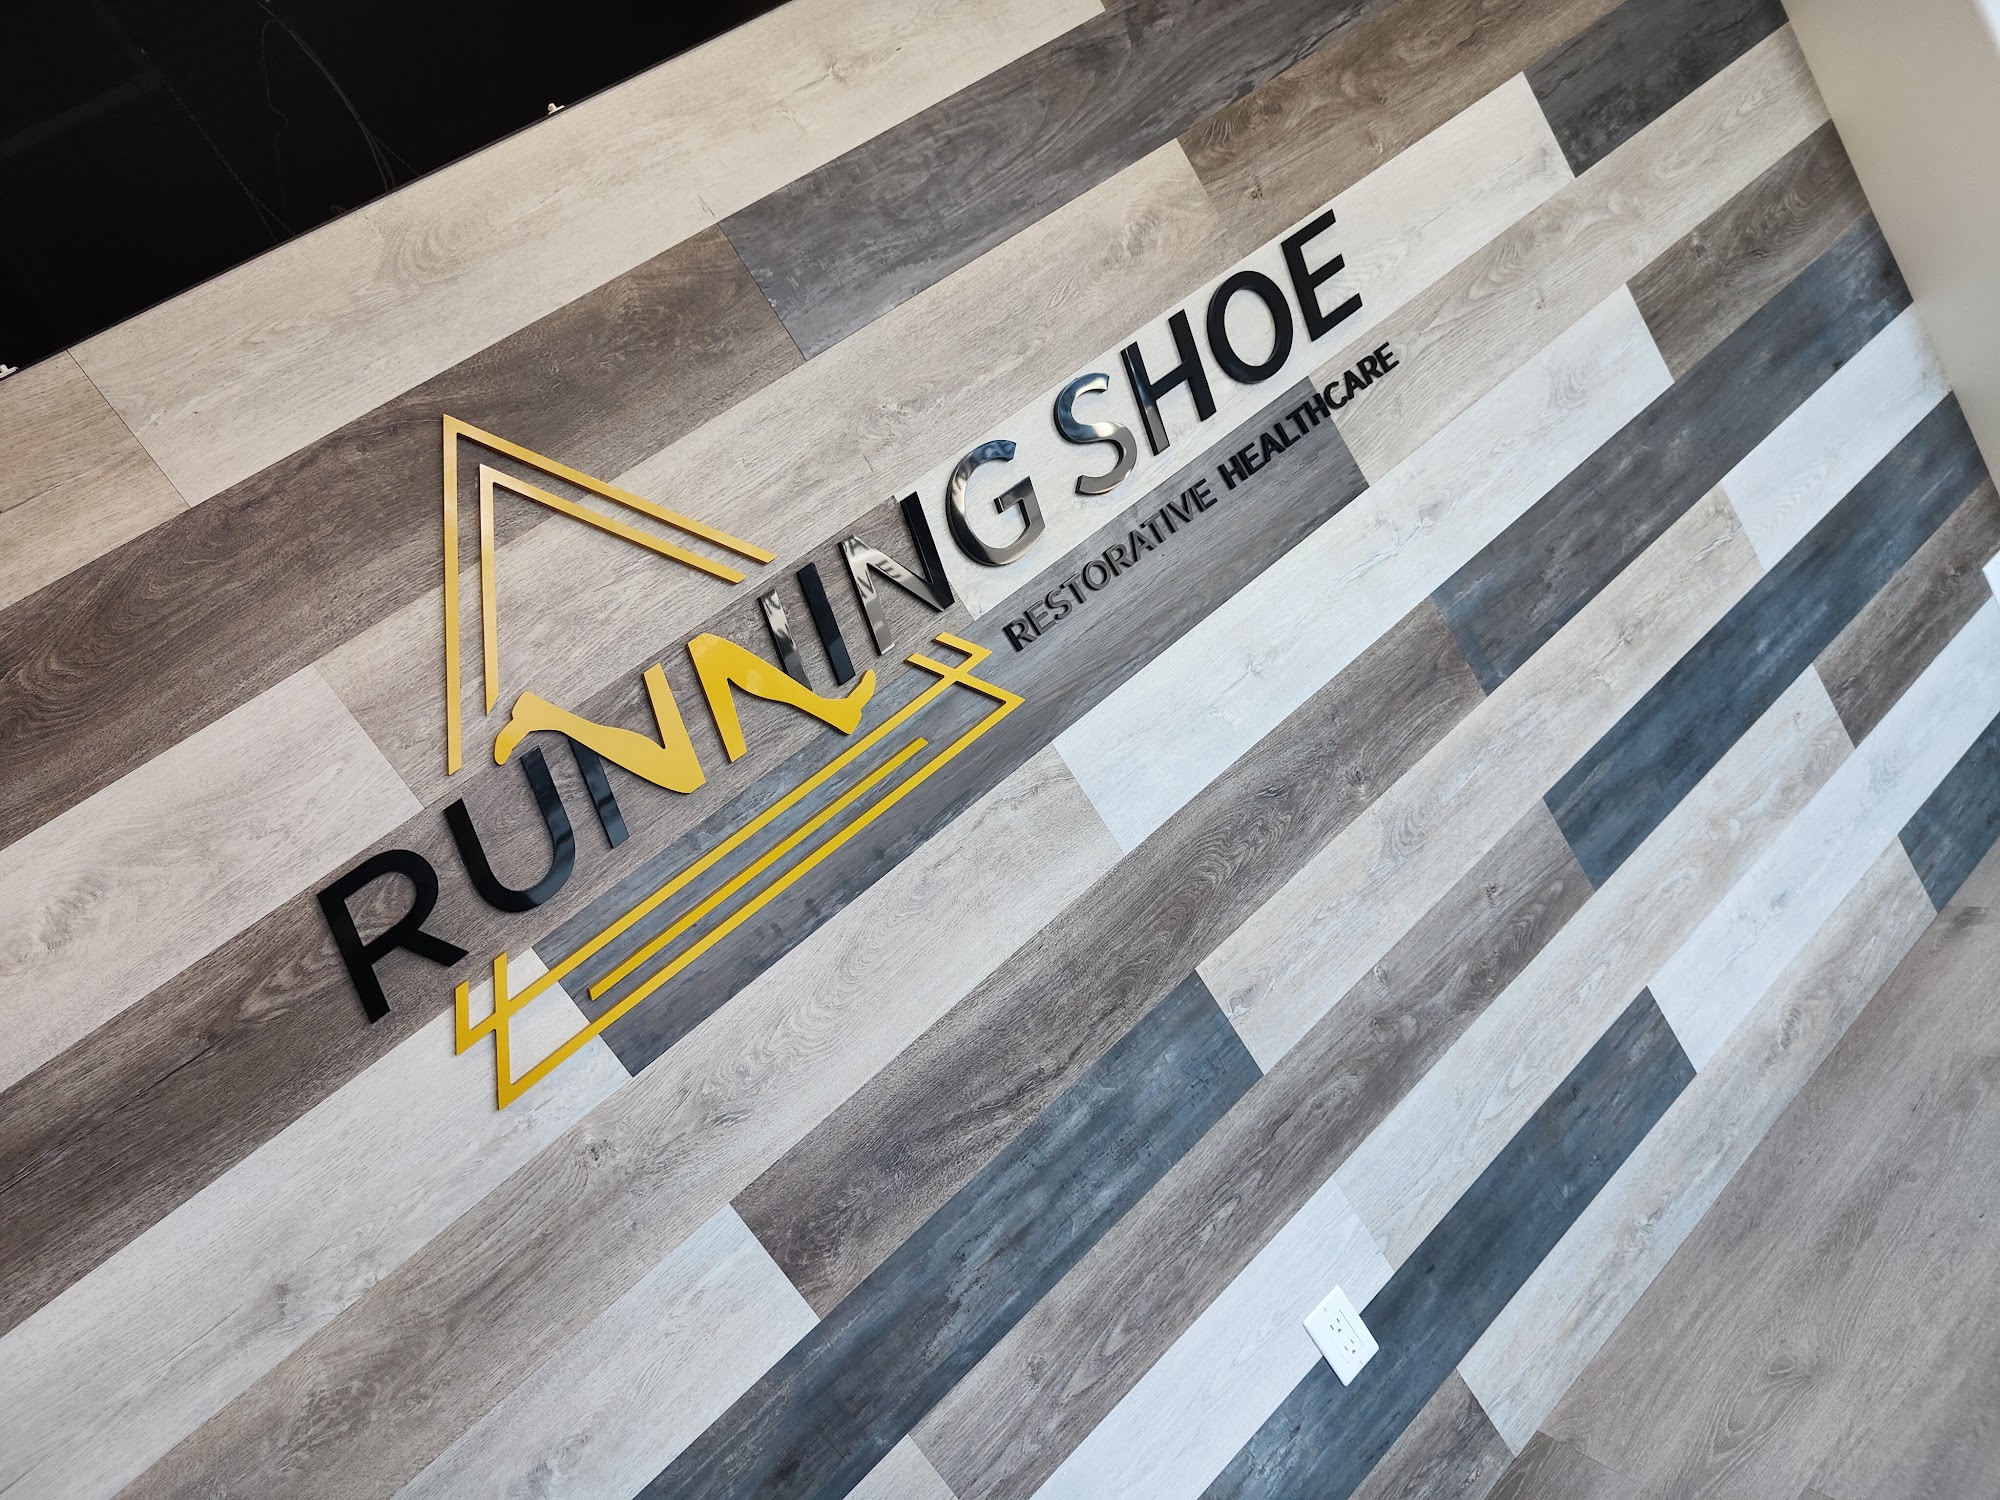 Running Shoe Restorative Healthcare